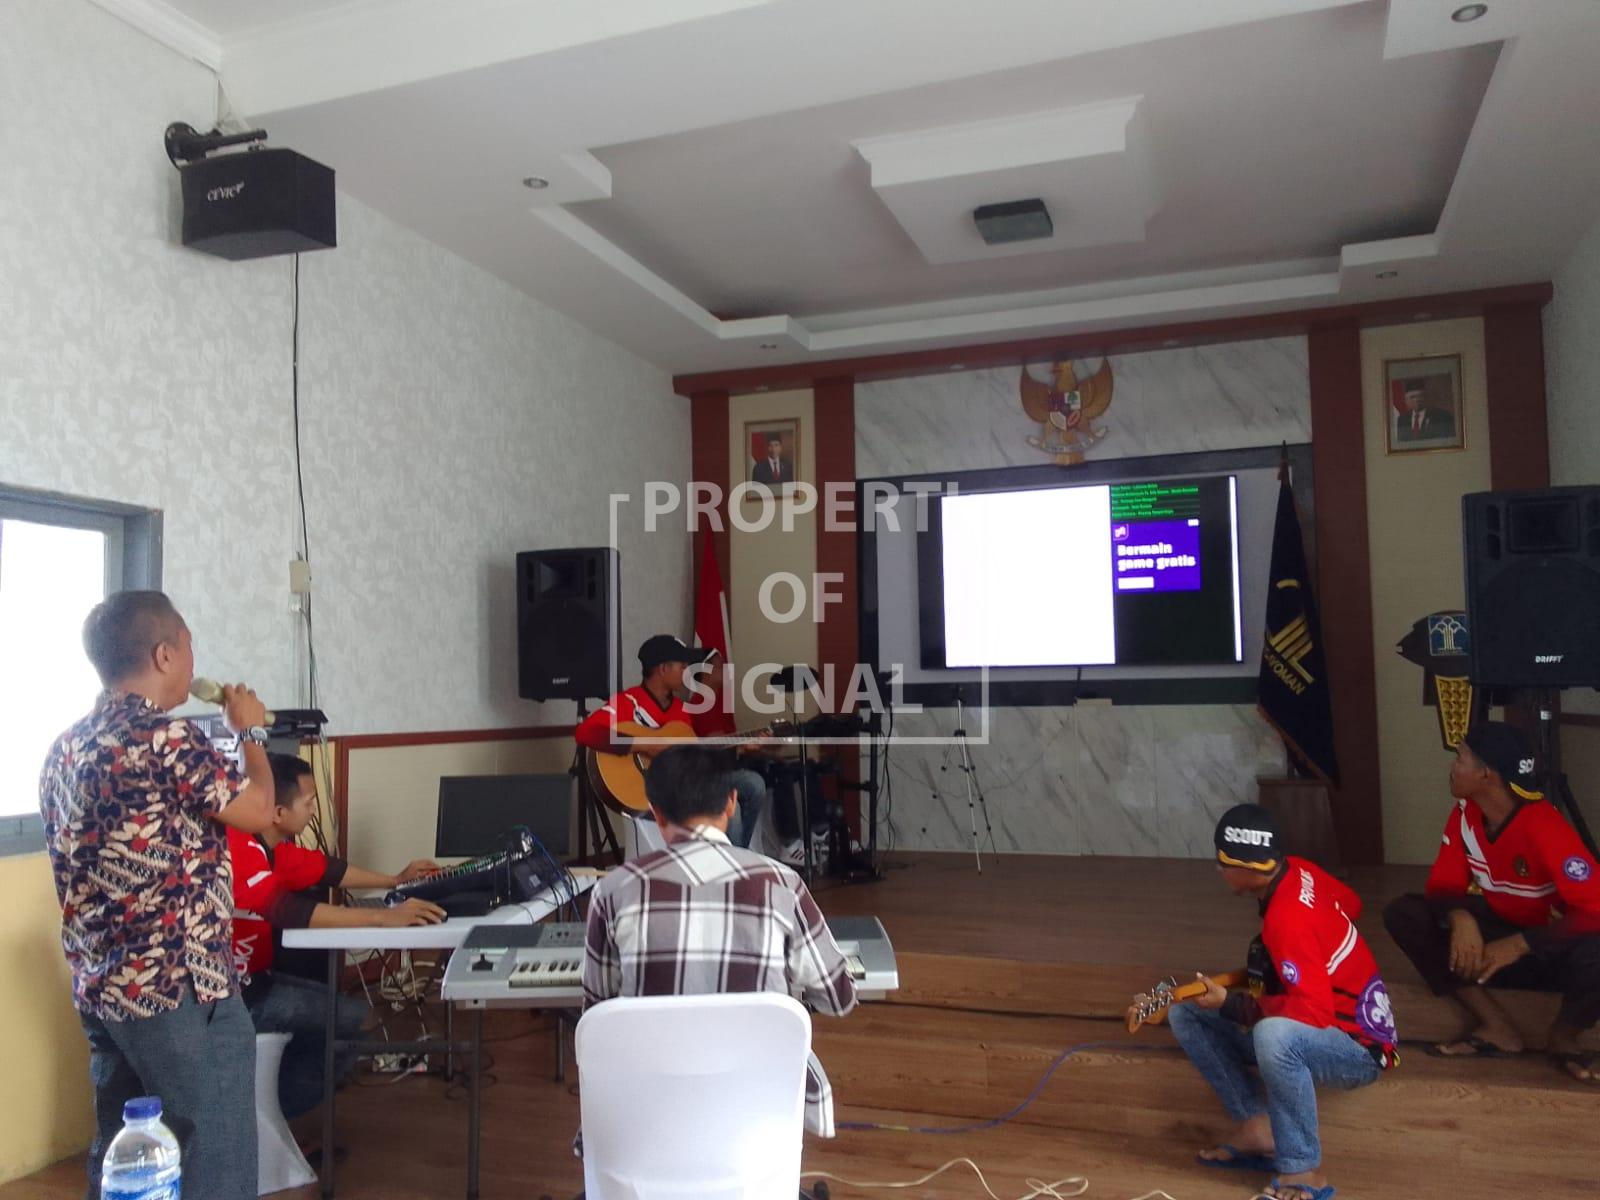 Warga Binaan Lapas Indramayu Asah Bakat Musik di Balik Jeruji